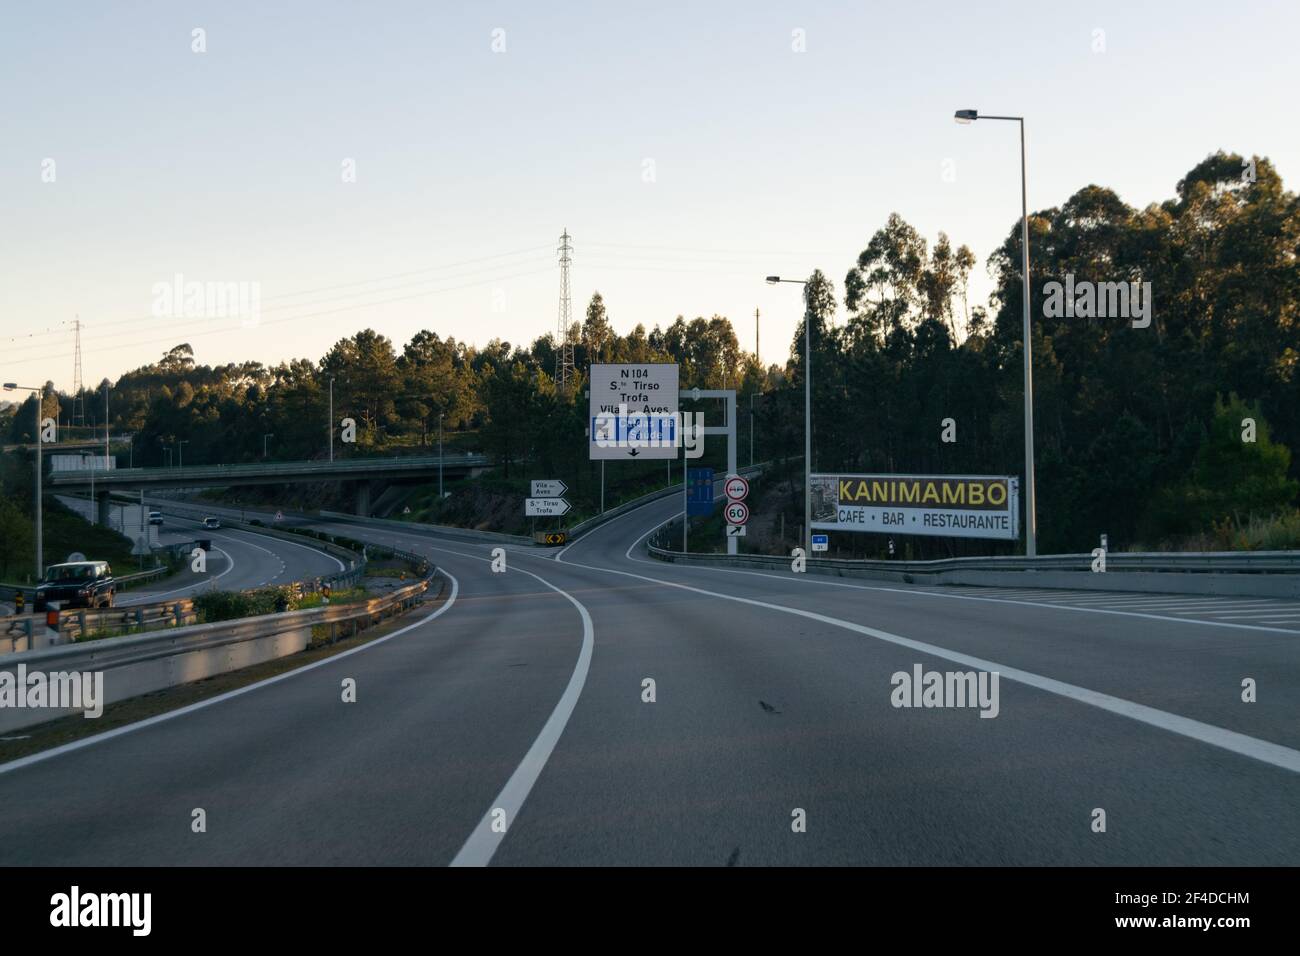 Guida o guida in autostrada o in autostrada. Autostrade portoghesi da Brisa Auto-estradas de Portugal. Uscita Vila das Aves e Santo Tirso. Foto Stock